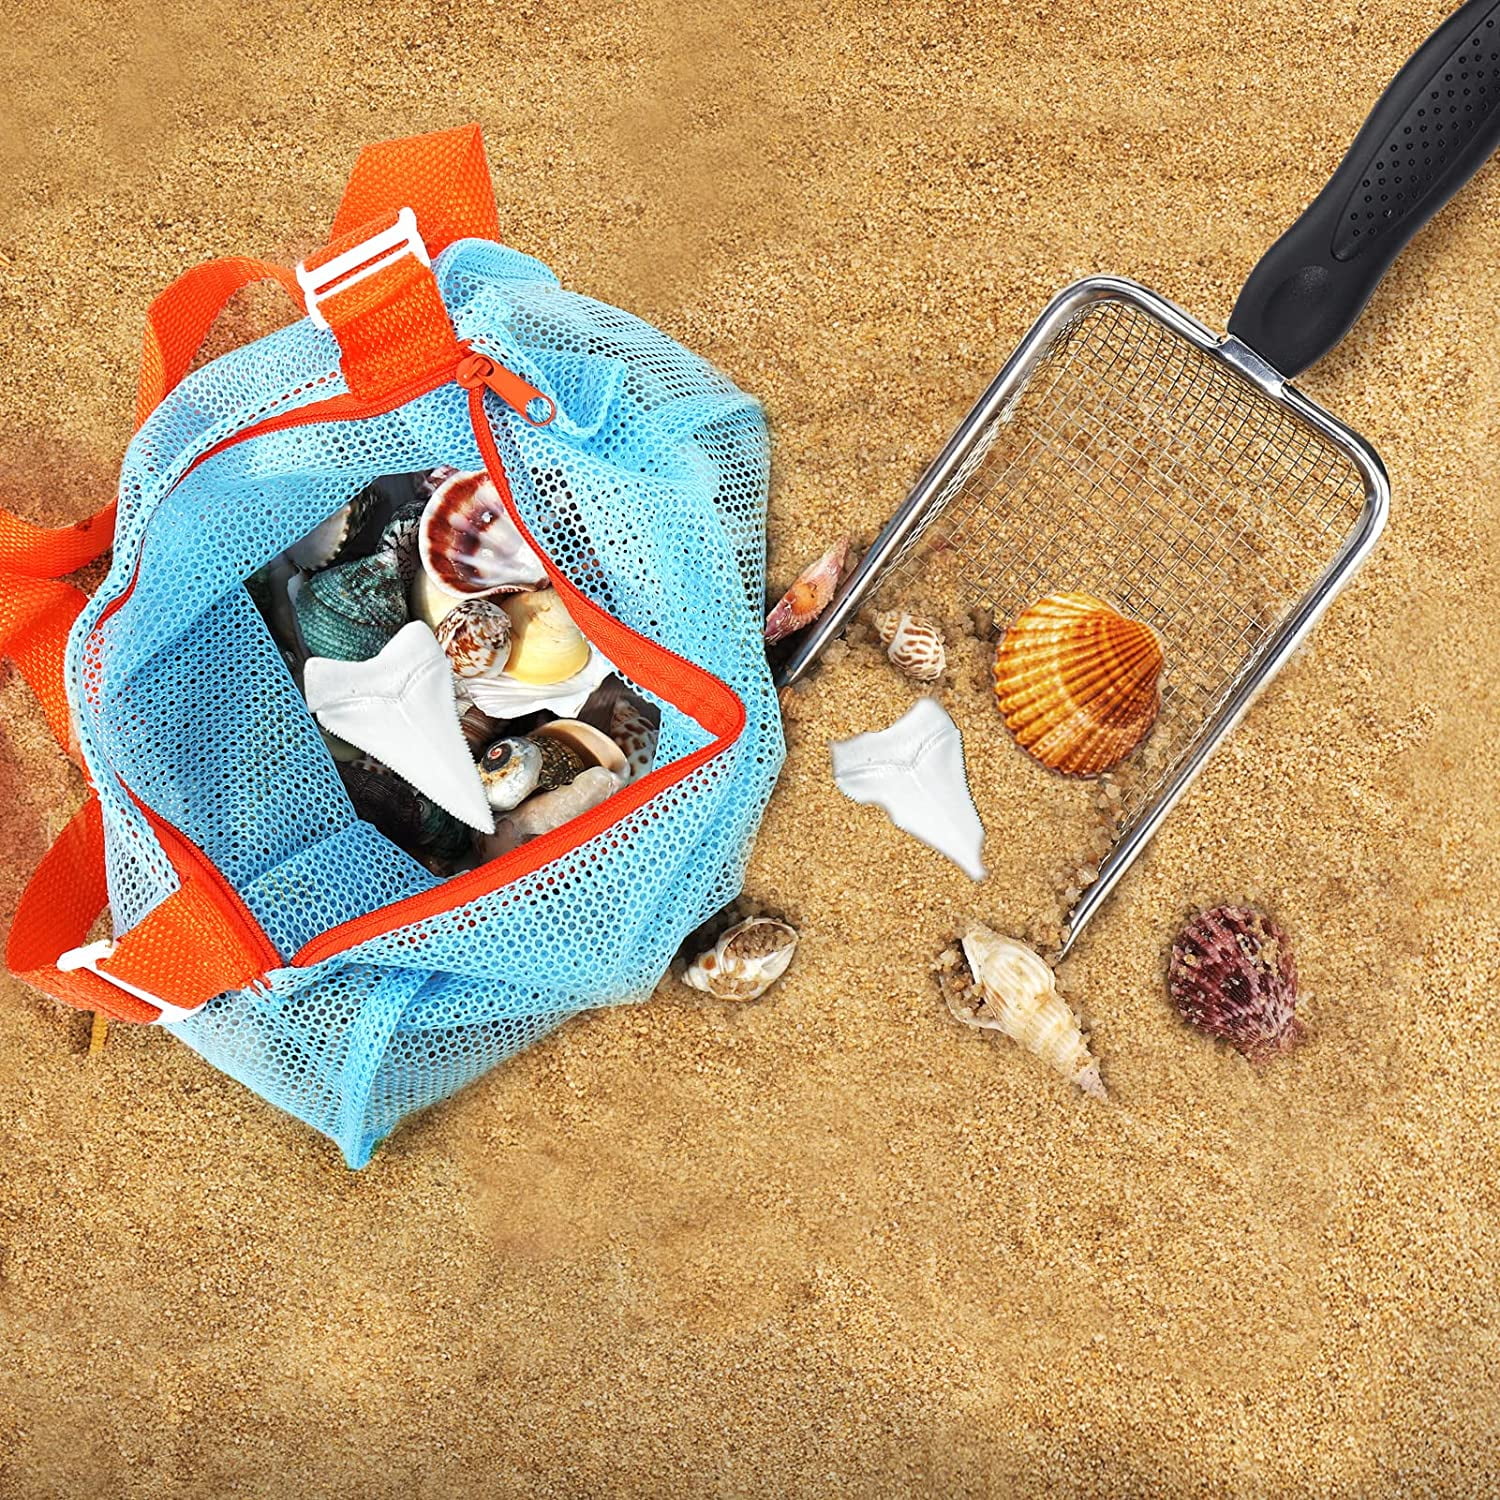 TOYMIS Beach Scoop, Shell Scoop, Mesh Scoop, Extra Long Adjustable Handle  Sand Beach Scoop Ice Fishing Scoop Skimmer Sand Scoops for Beach Sifter